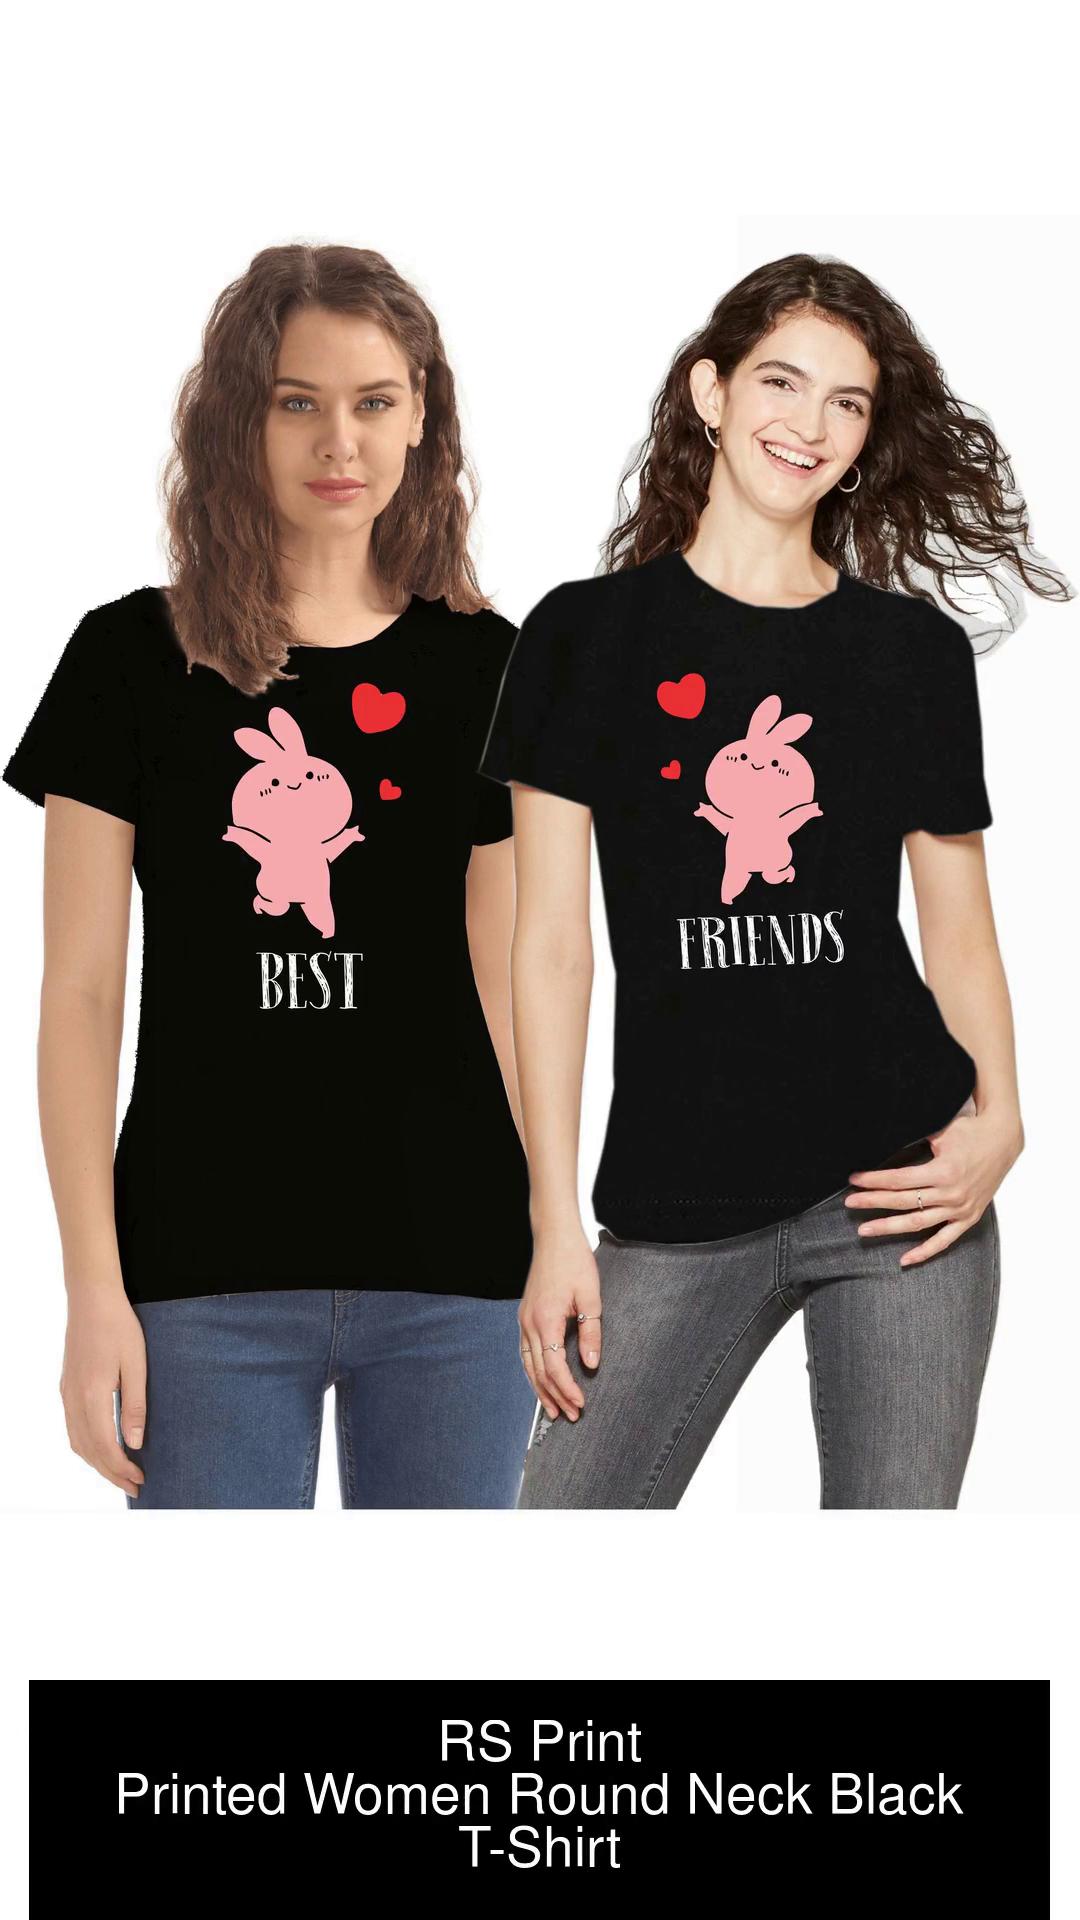 Bksh Printed Women Round Neck Black T-shirt